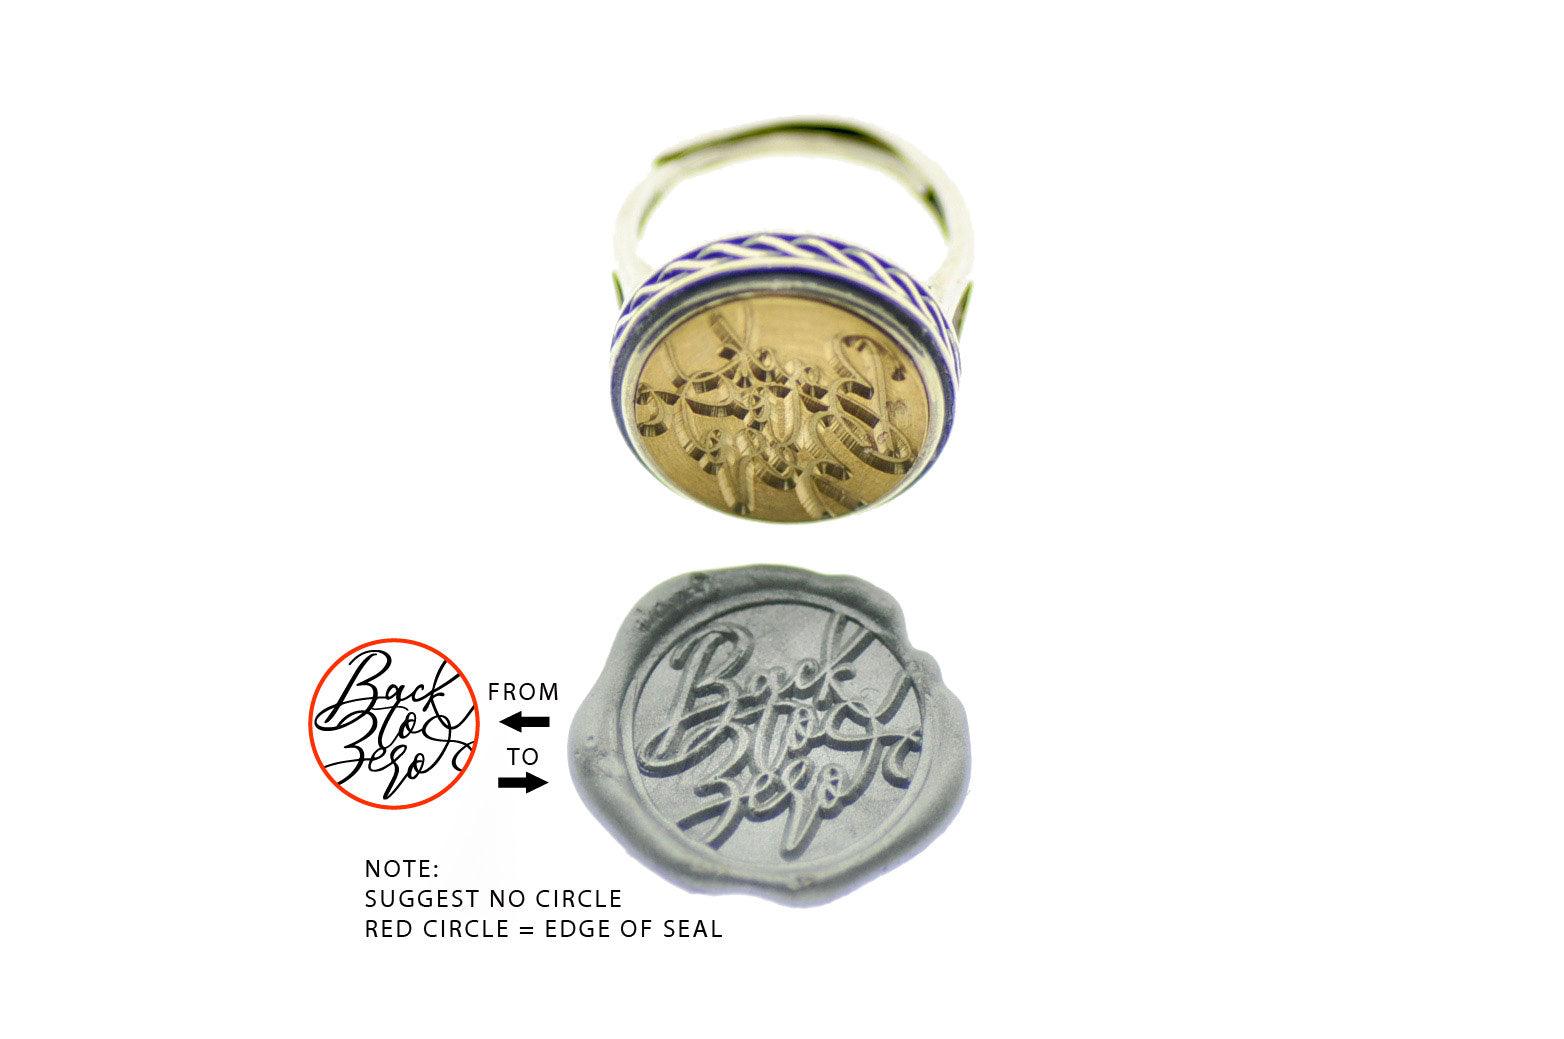 Bespoke Custom Design Your Own Logo Wax Seal Stamp